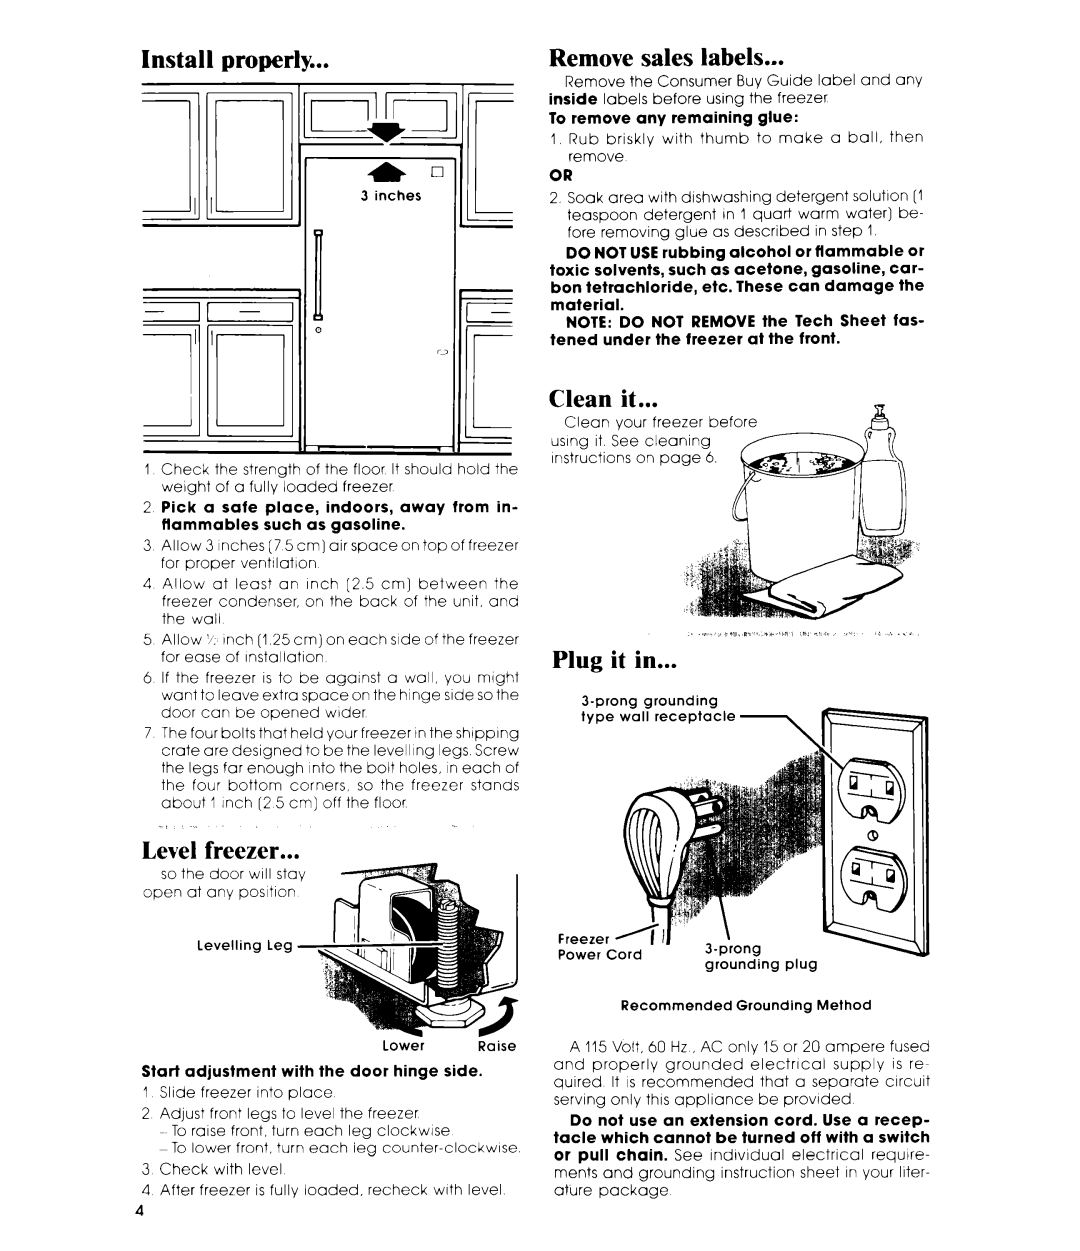 Whirlpool EV150CXR manual Install properly, sales labels, Level freezer, Clean it, Plug it in, Remove 